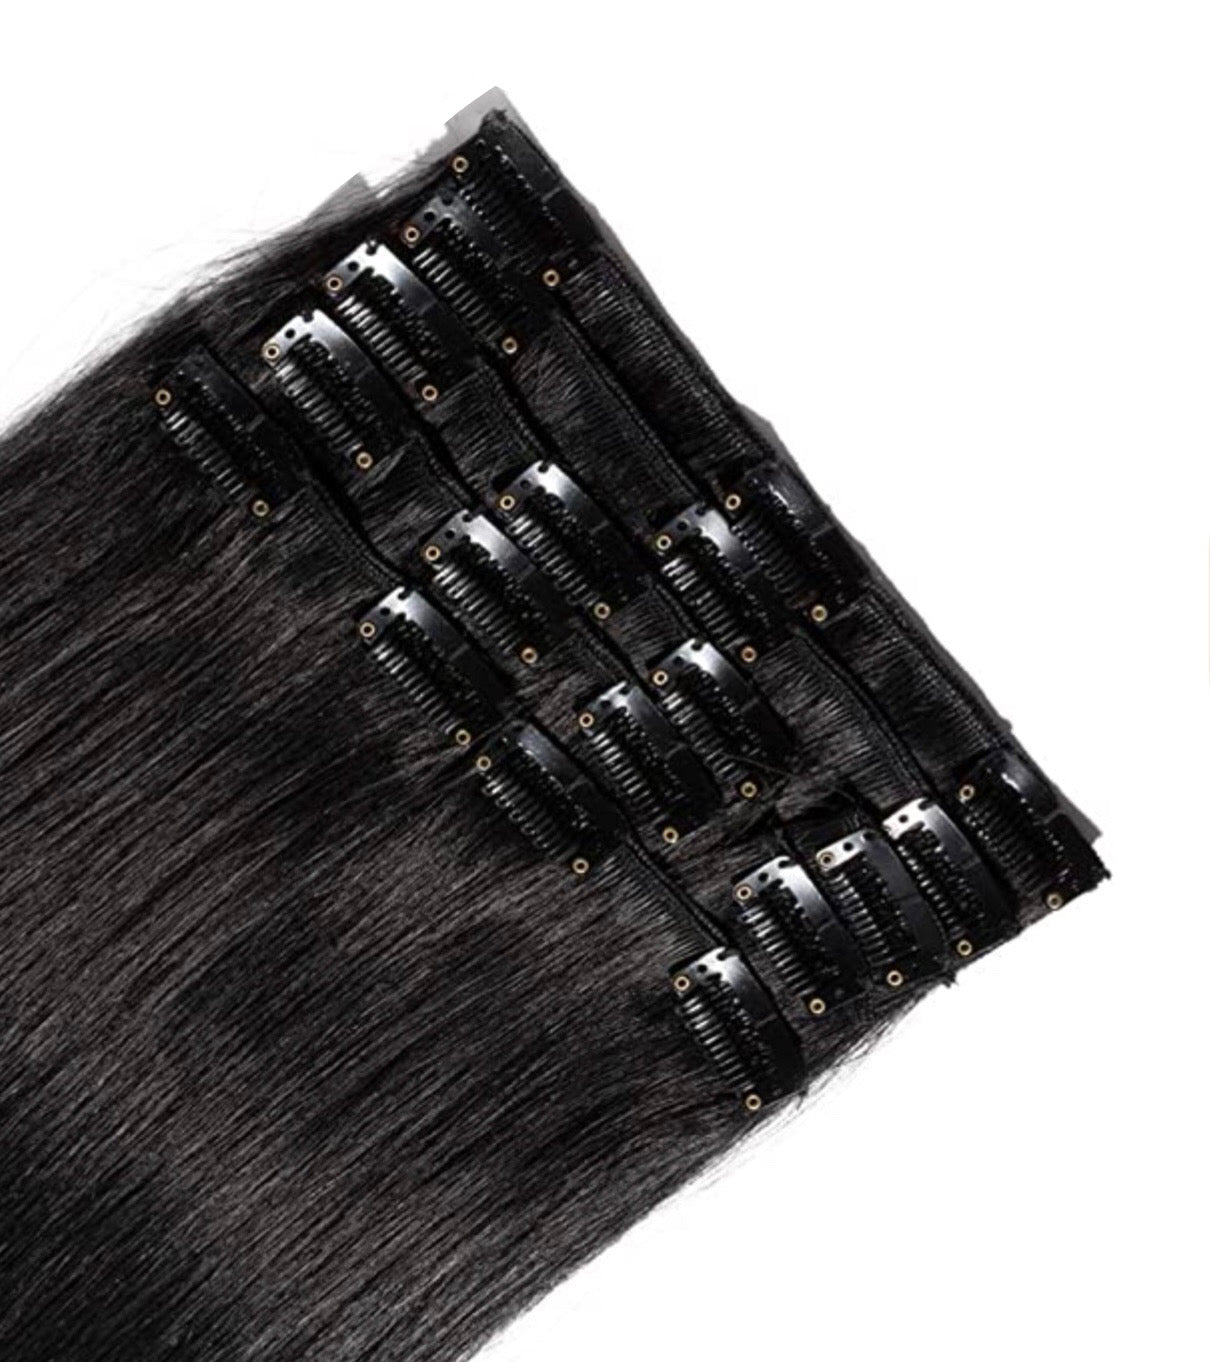 Natural Black Pure Virgin Clip-In Human Hair Extensions